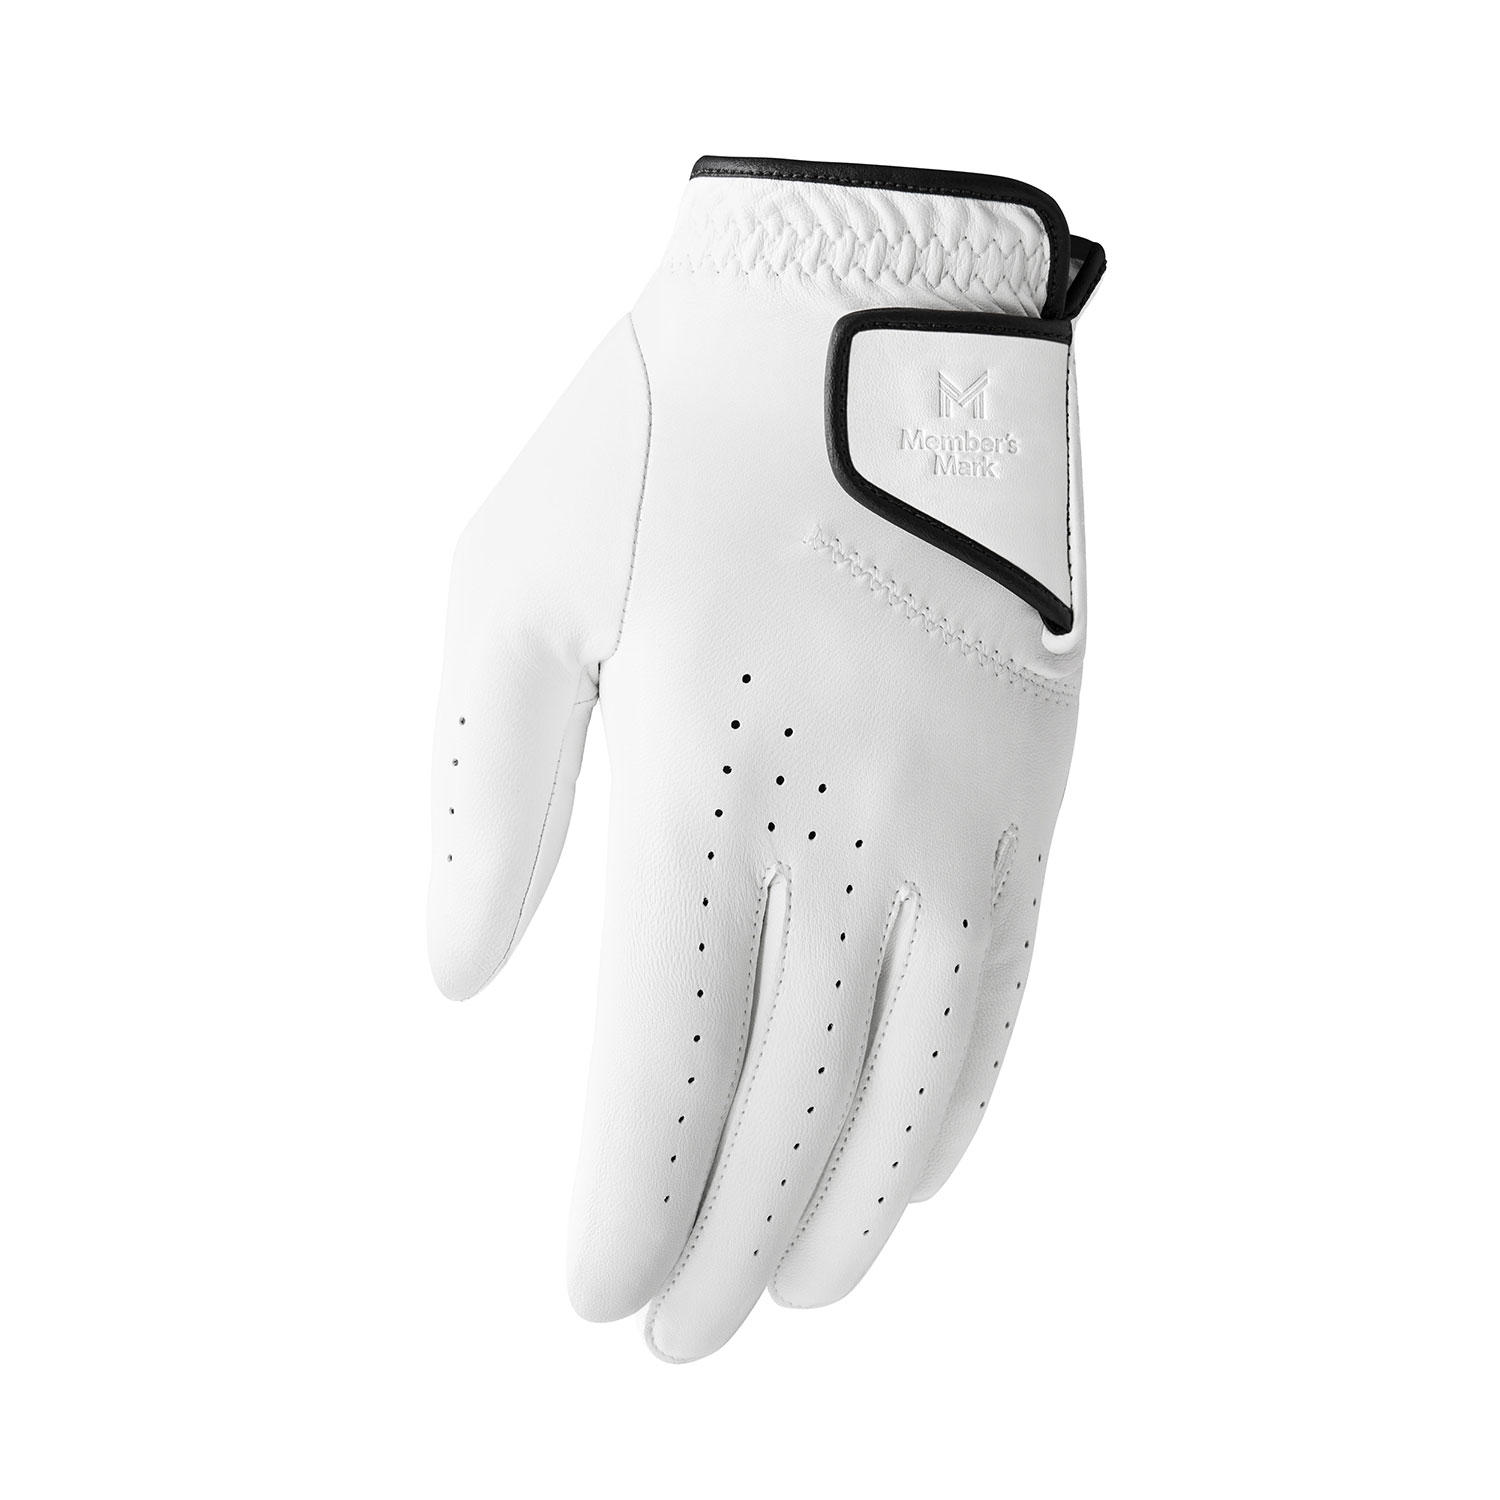 Member's Mark Elite Premium Golf Glove- XL